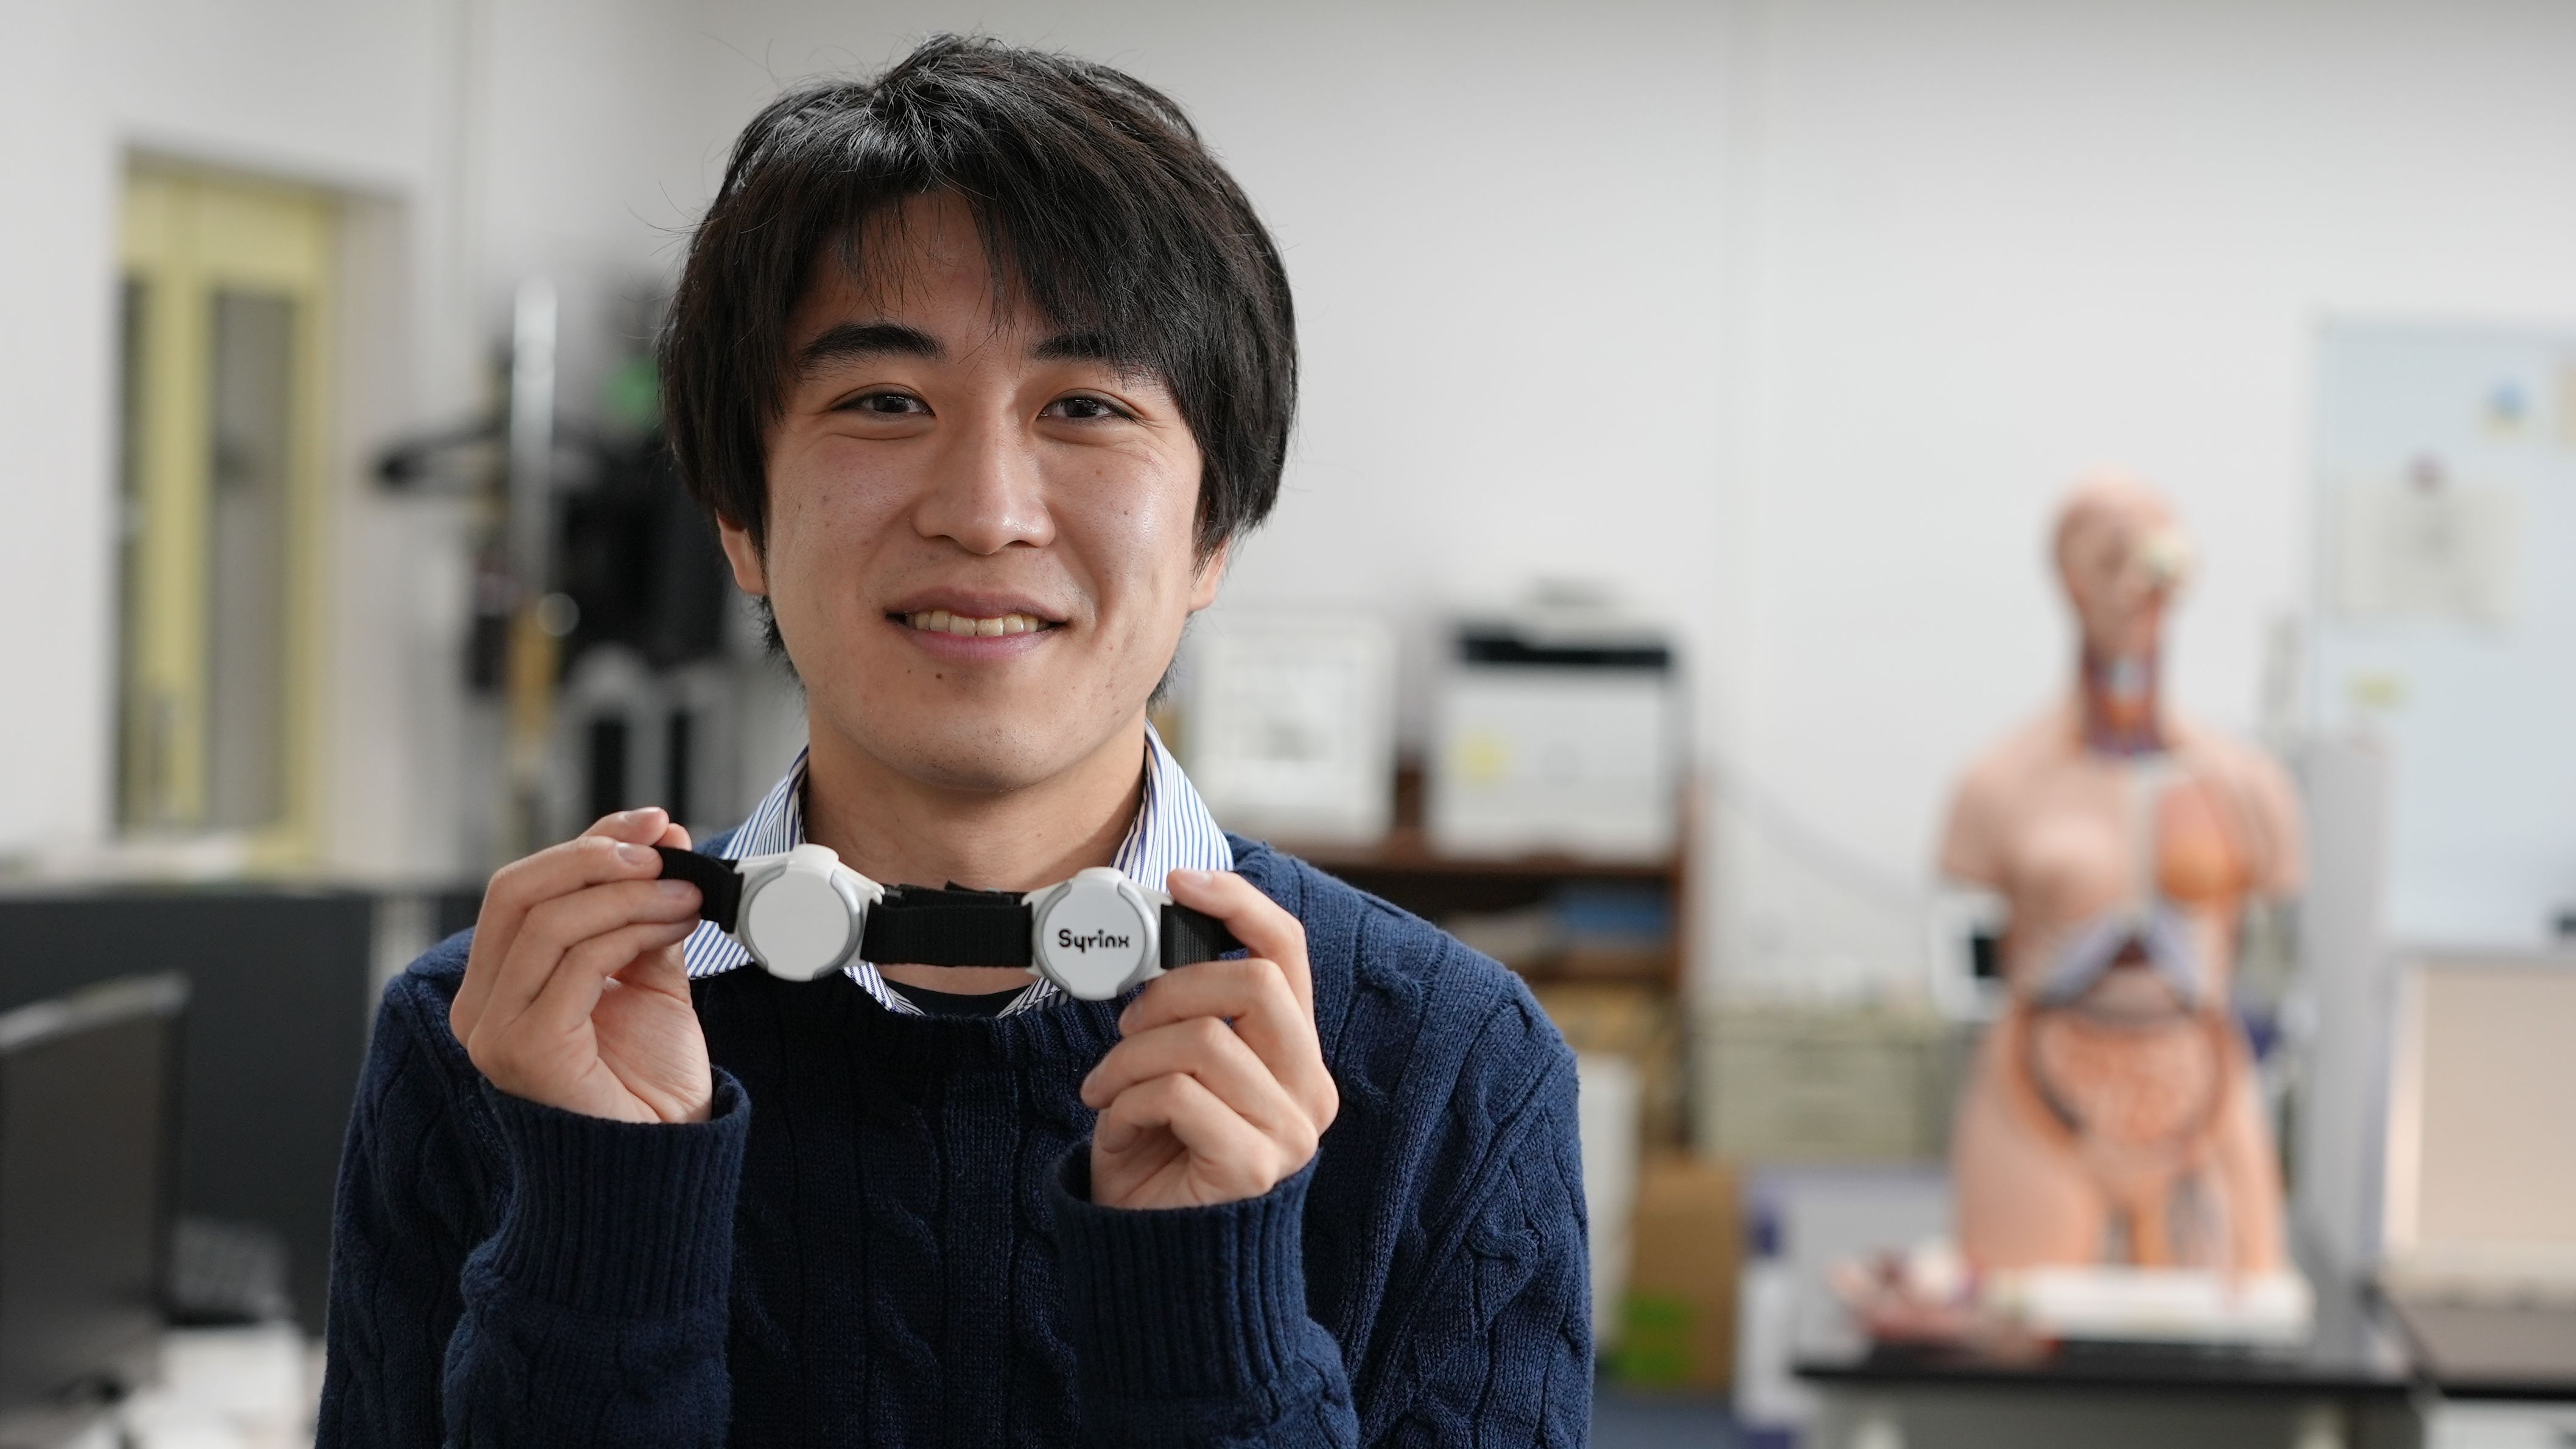 Masaki Takeuchi began engineering the artificial larynx prototype, Syrinx, in 2019.